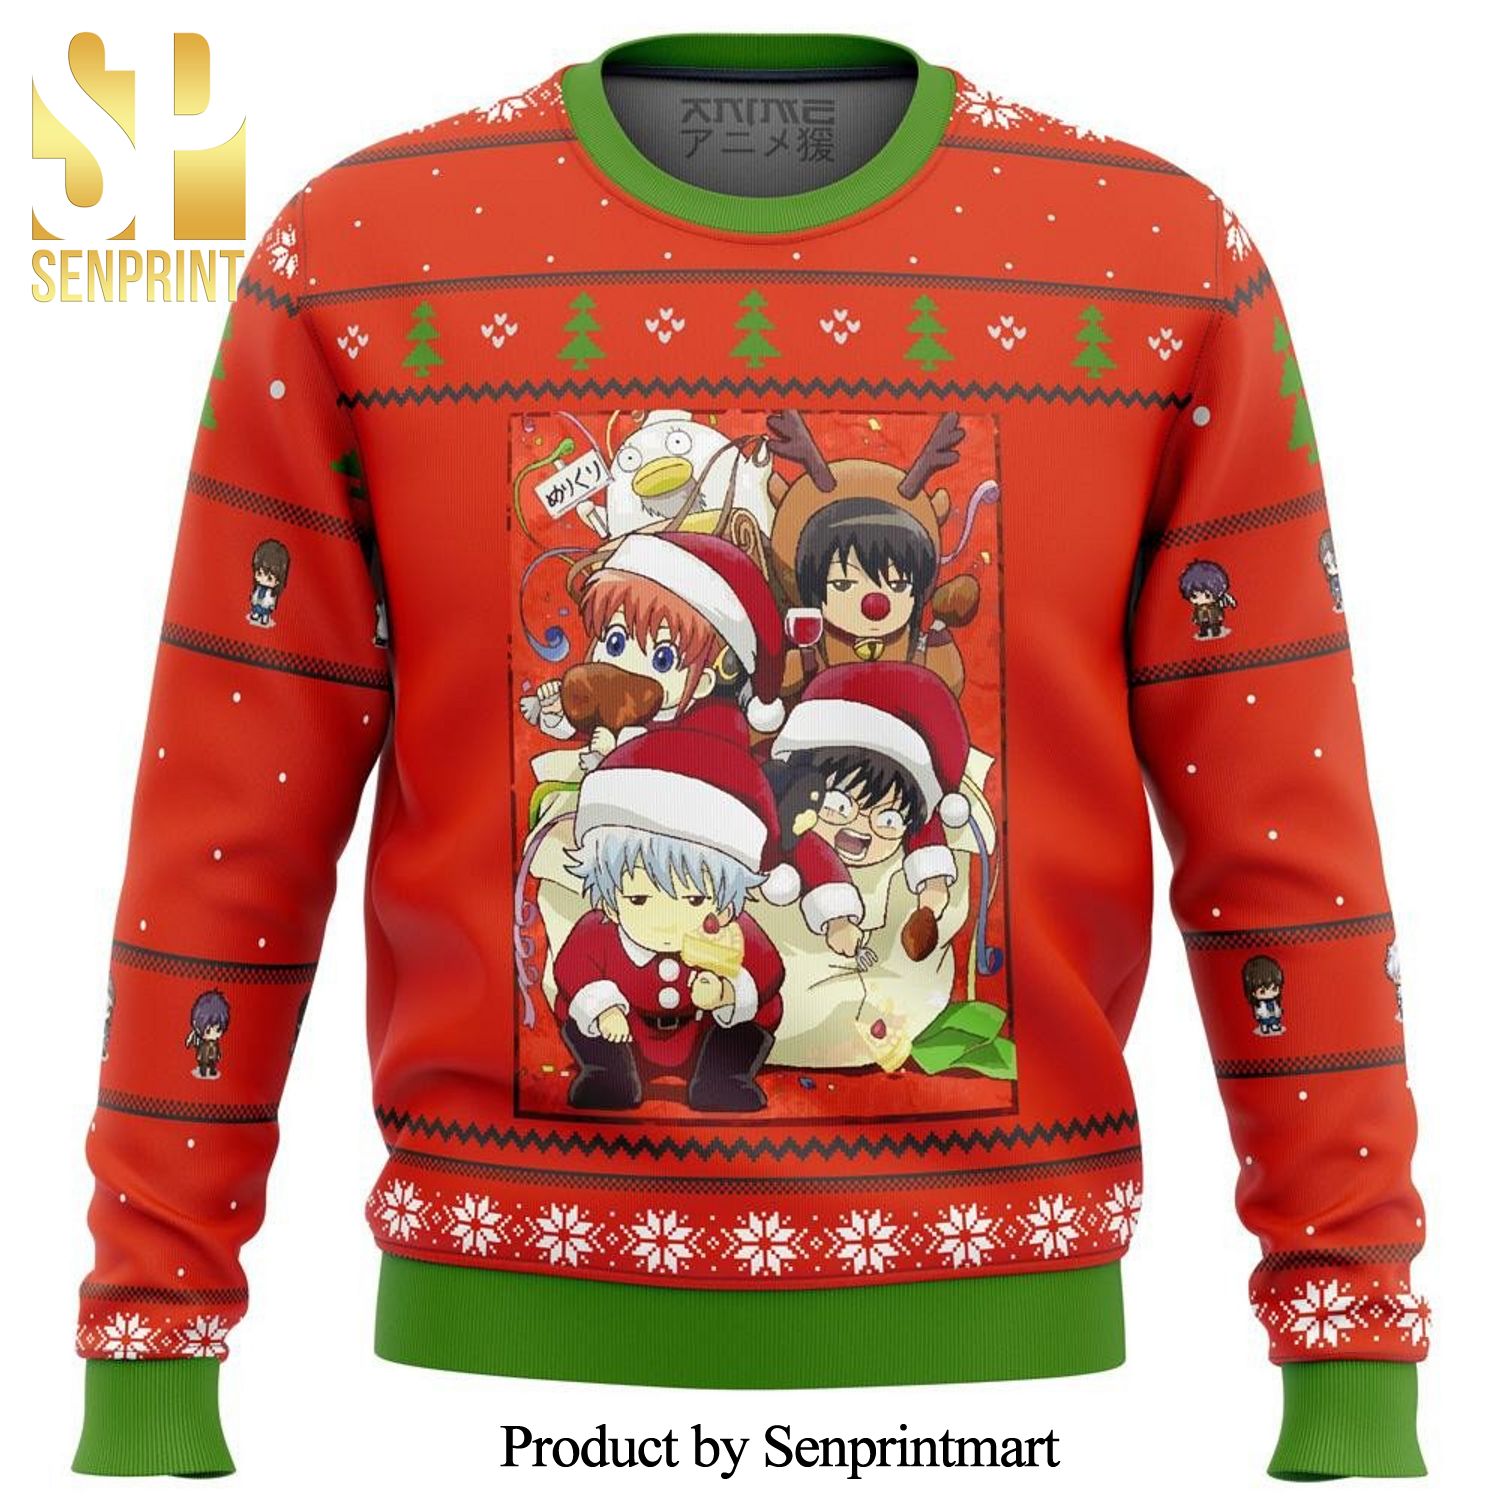 Gintama Holiday Premium Manga Anime Knitted Ugly Christmas Sweater